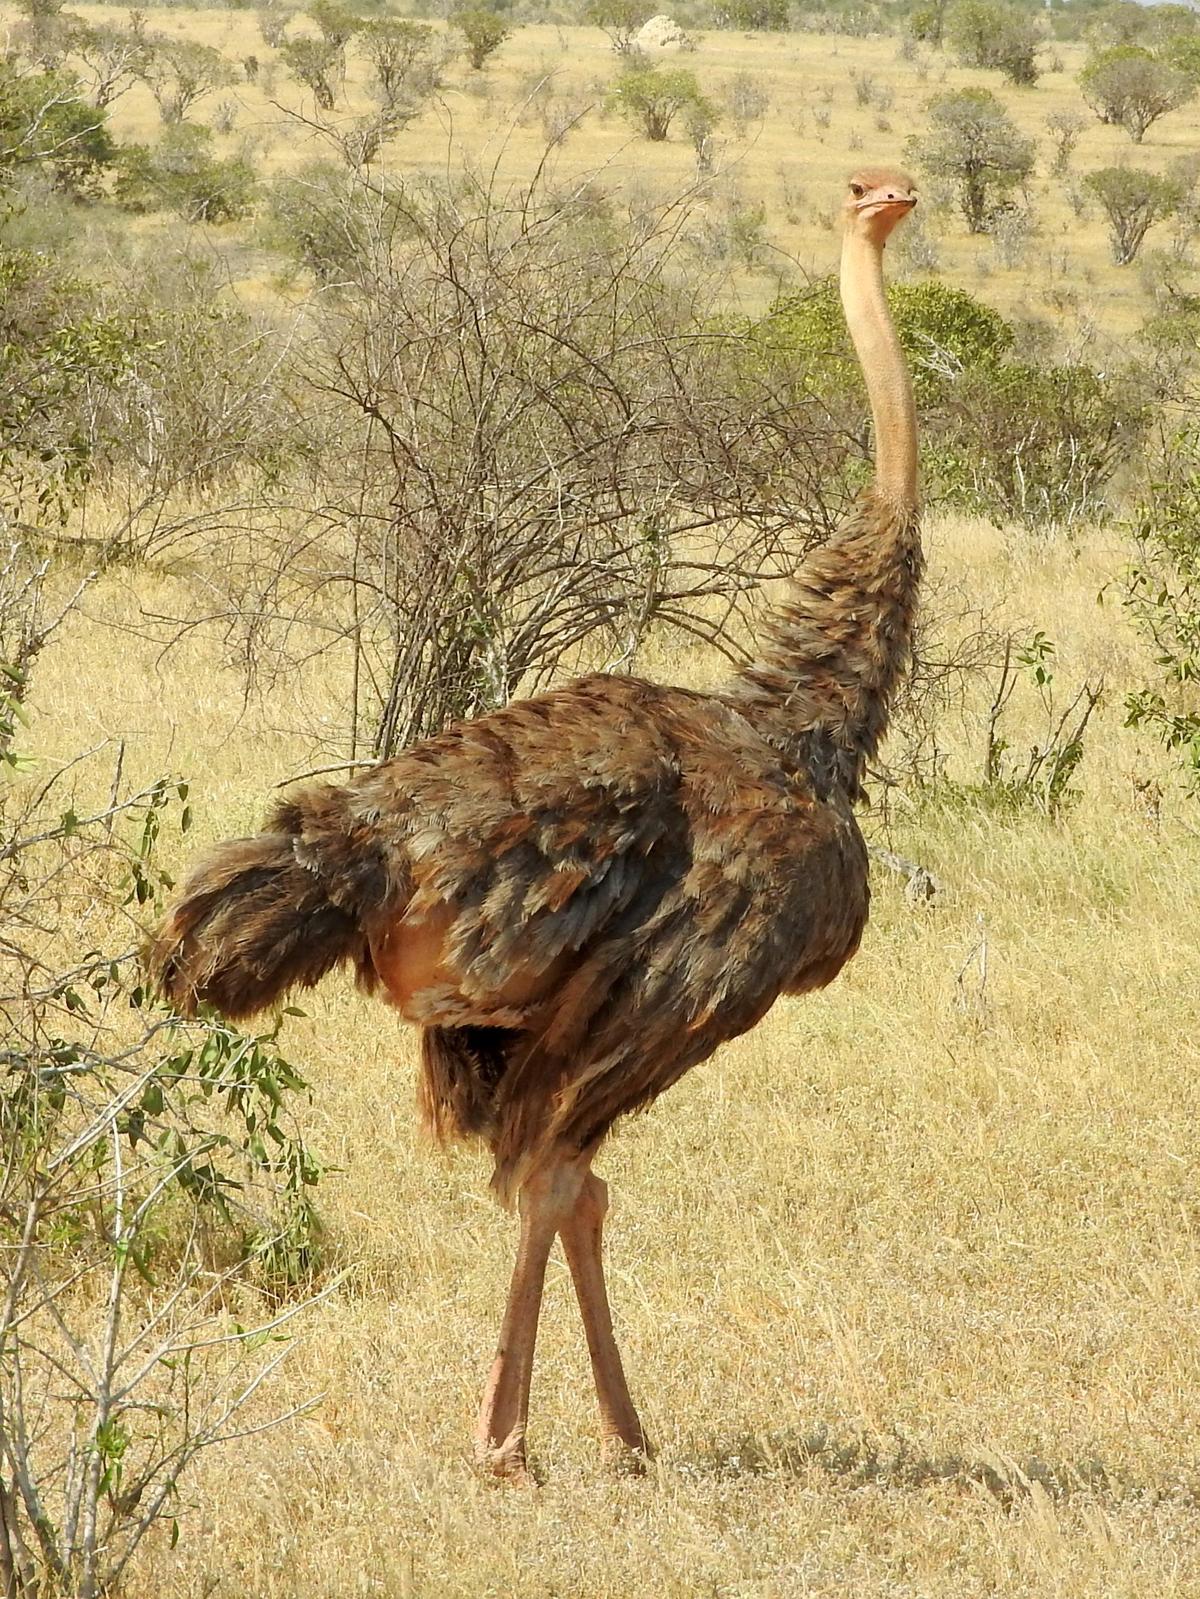 Somali Ostrich Photo by Todd A. Watkins